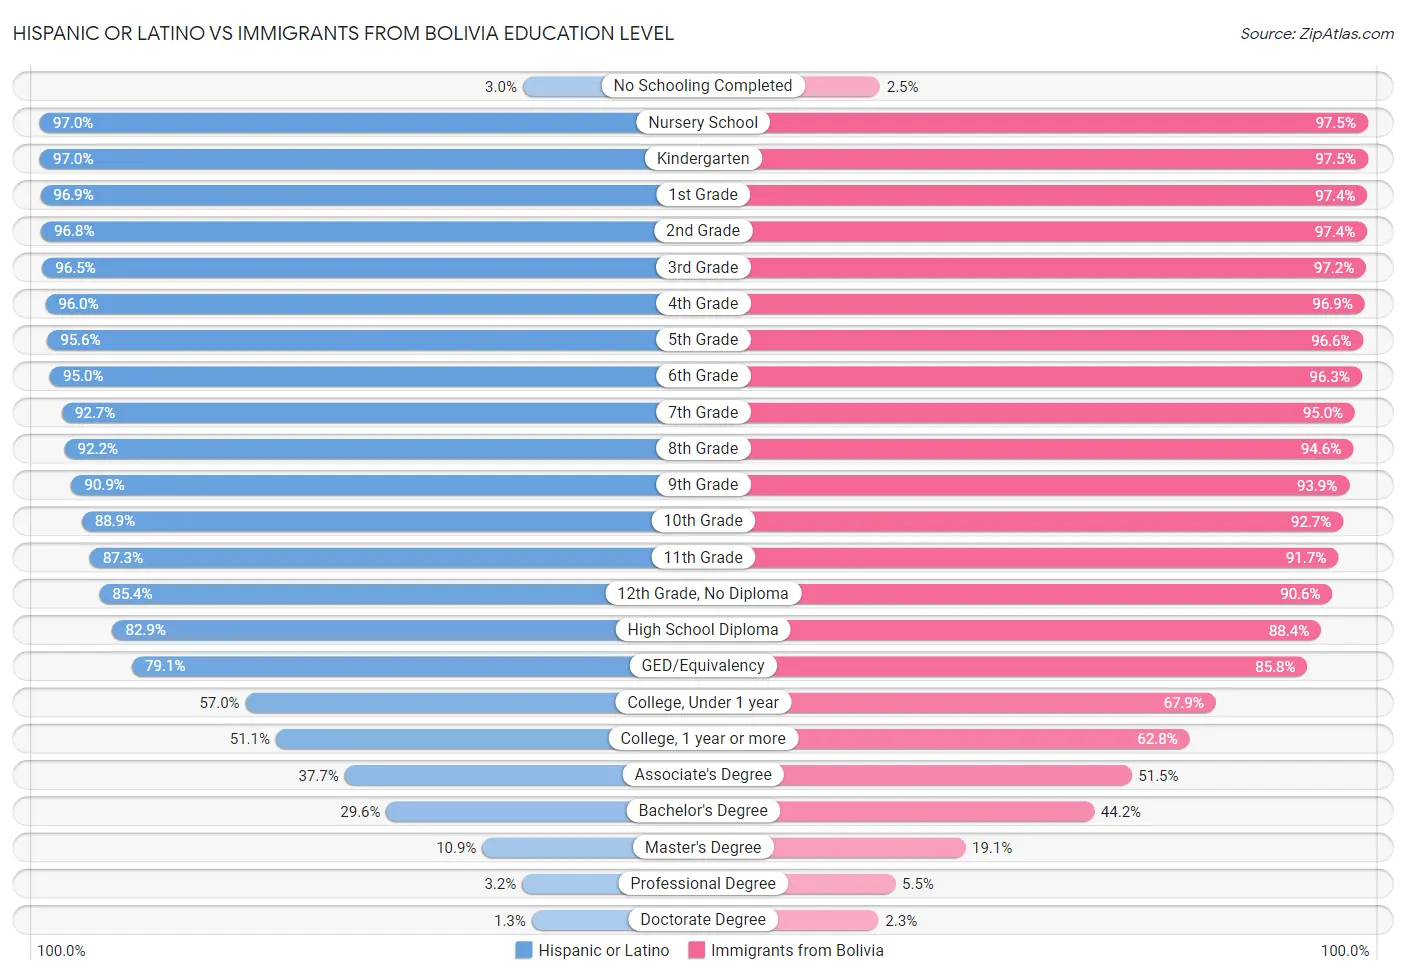 Hispanic or Latino vs Immigrants from Bolivia Education Level